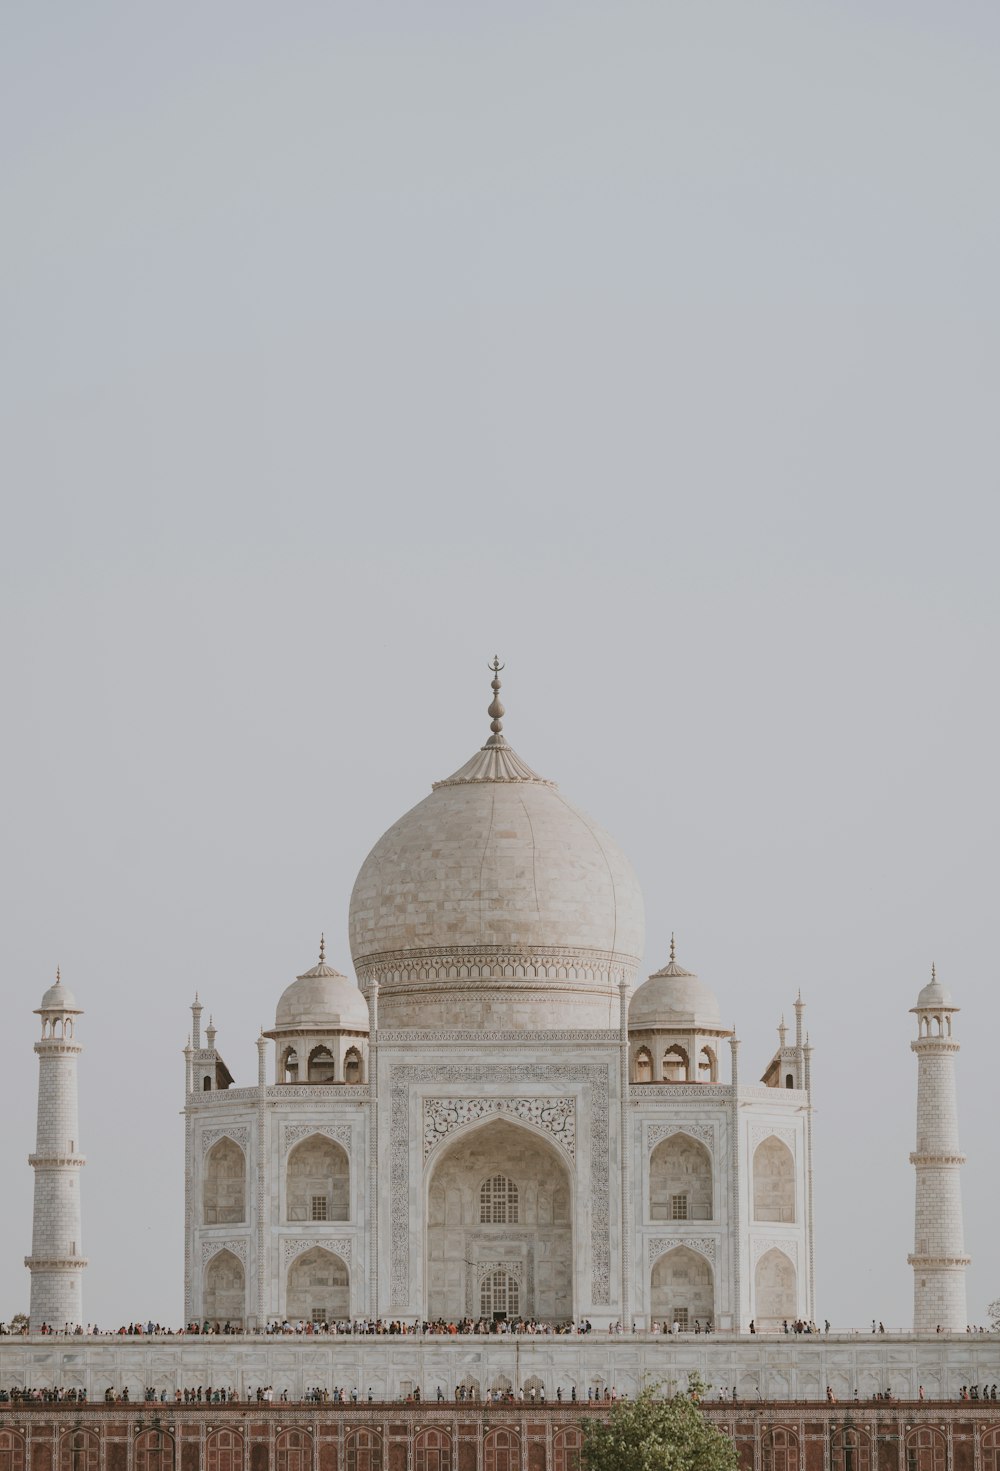 Taj Mahal, India A VISIT TO A HISTORICAL PLACE"HISTORY MAKES A FULL MAN."